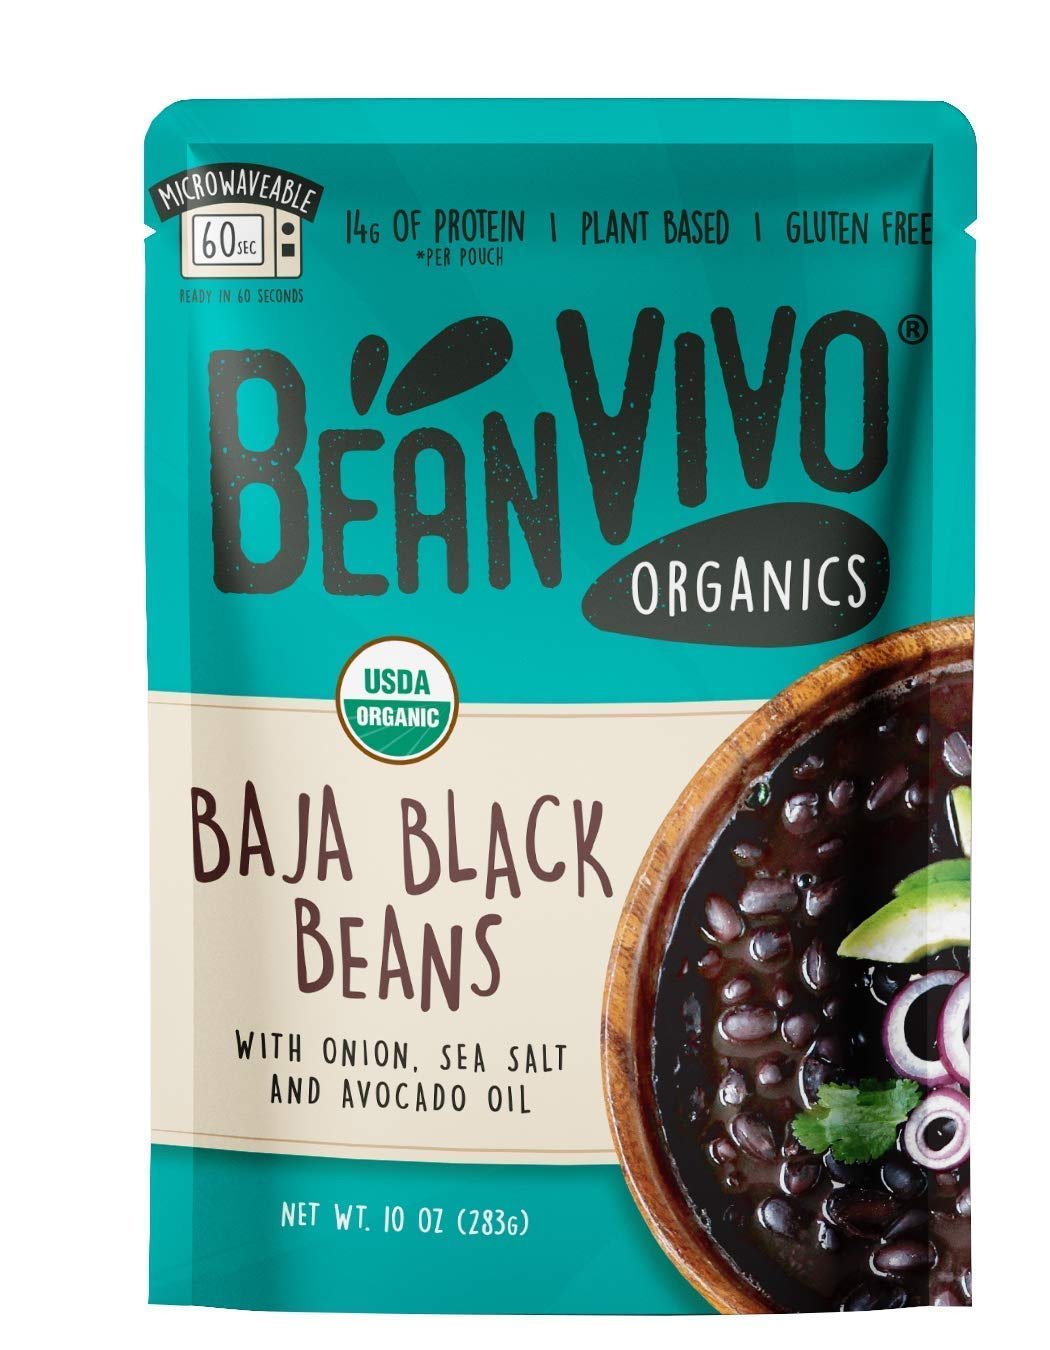 Package of BeanVIVO Baja Black beans